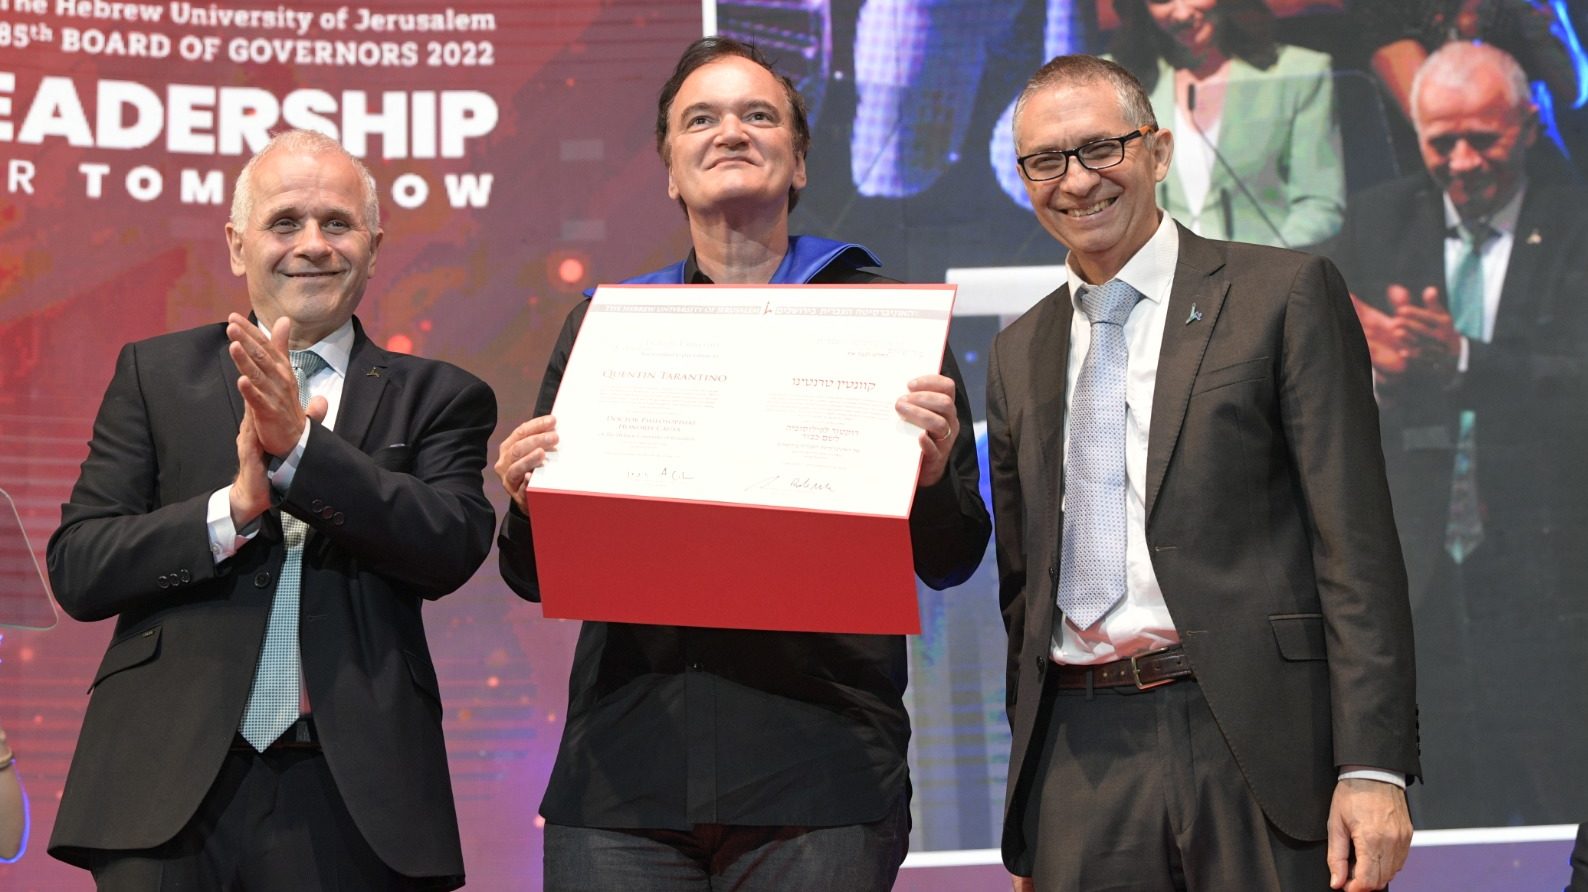 Hebrew University Awards Honorary Doctorate to Filmmaker Quentin Tarantino